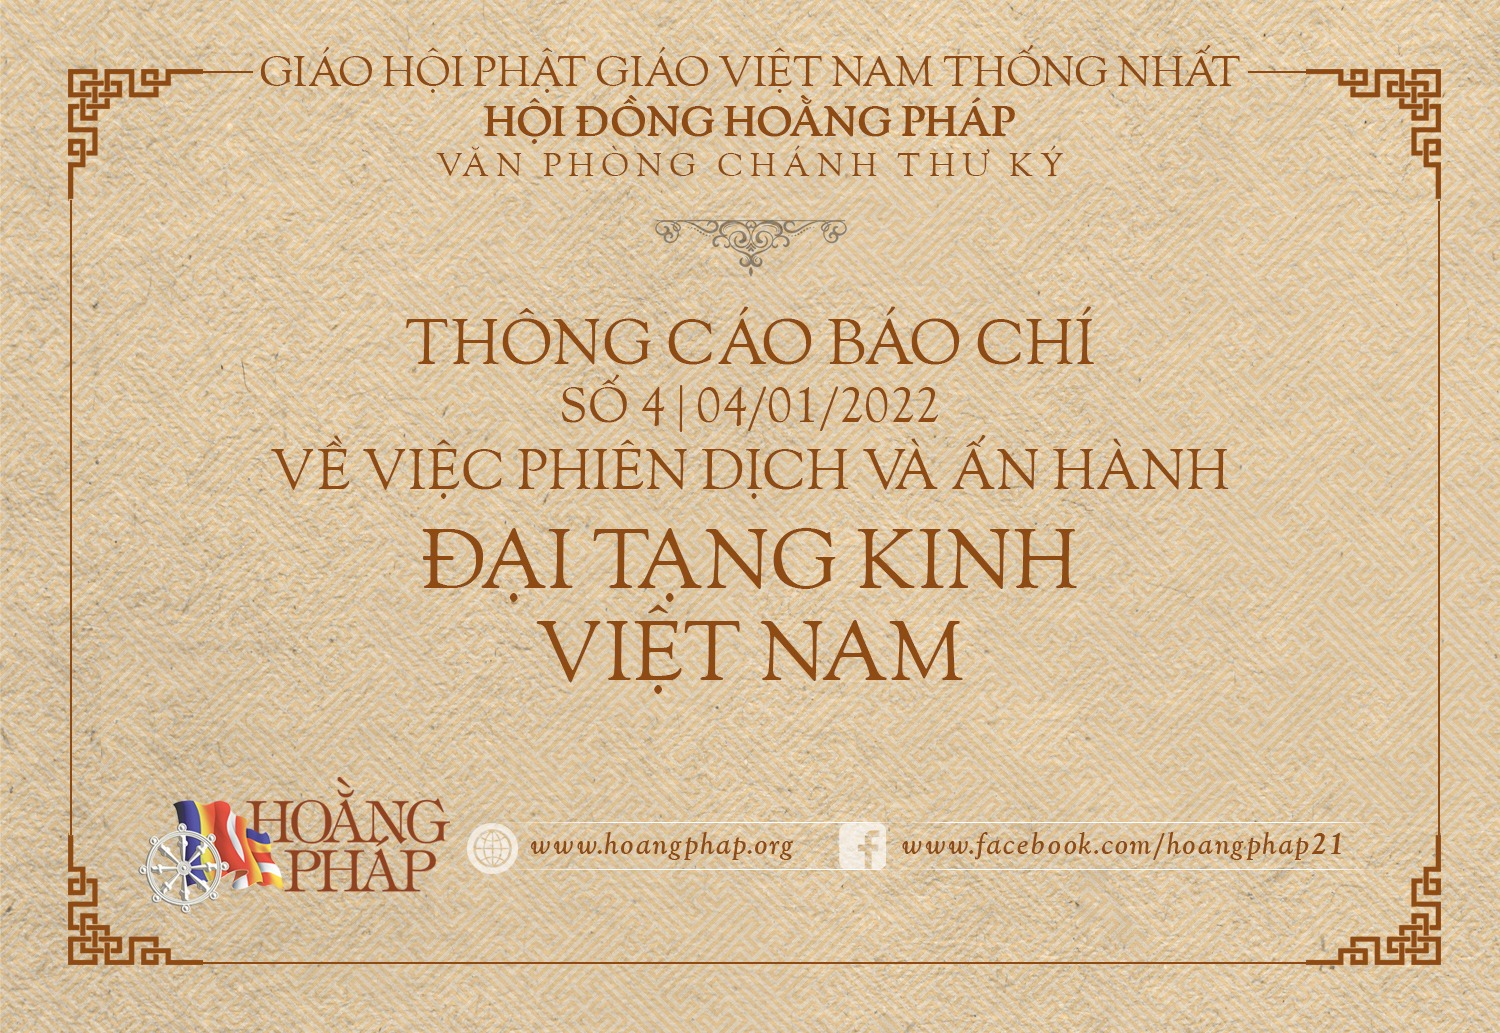 THONG CAO BAO CHI